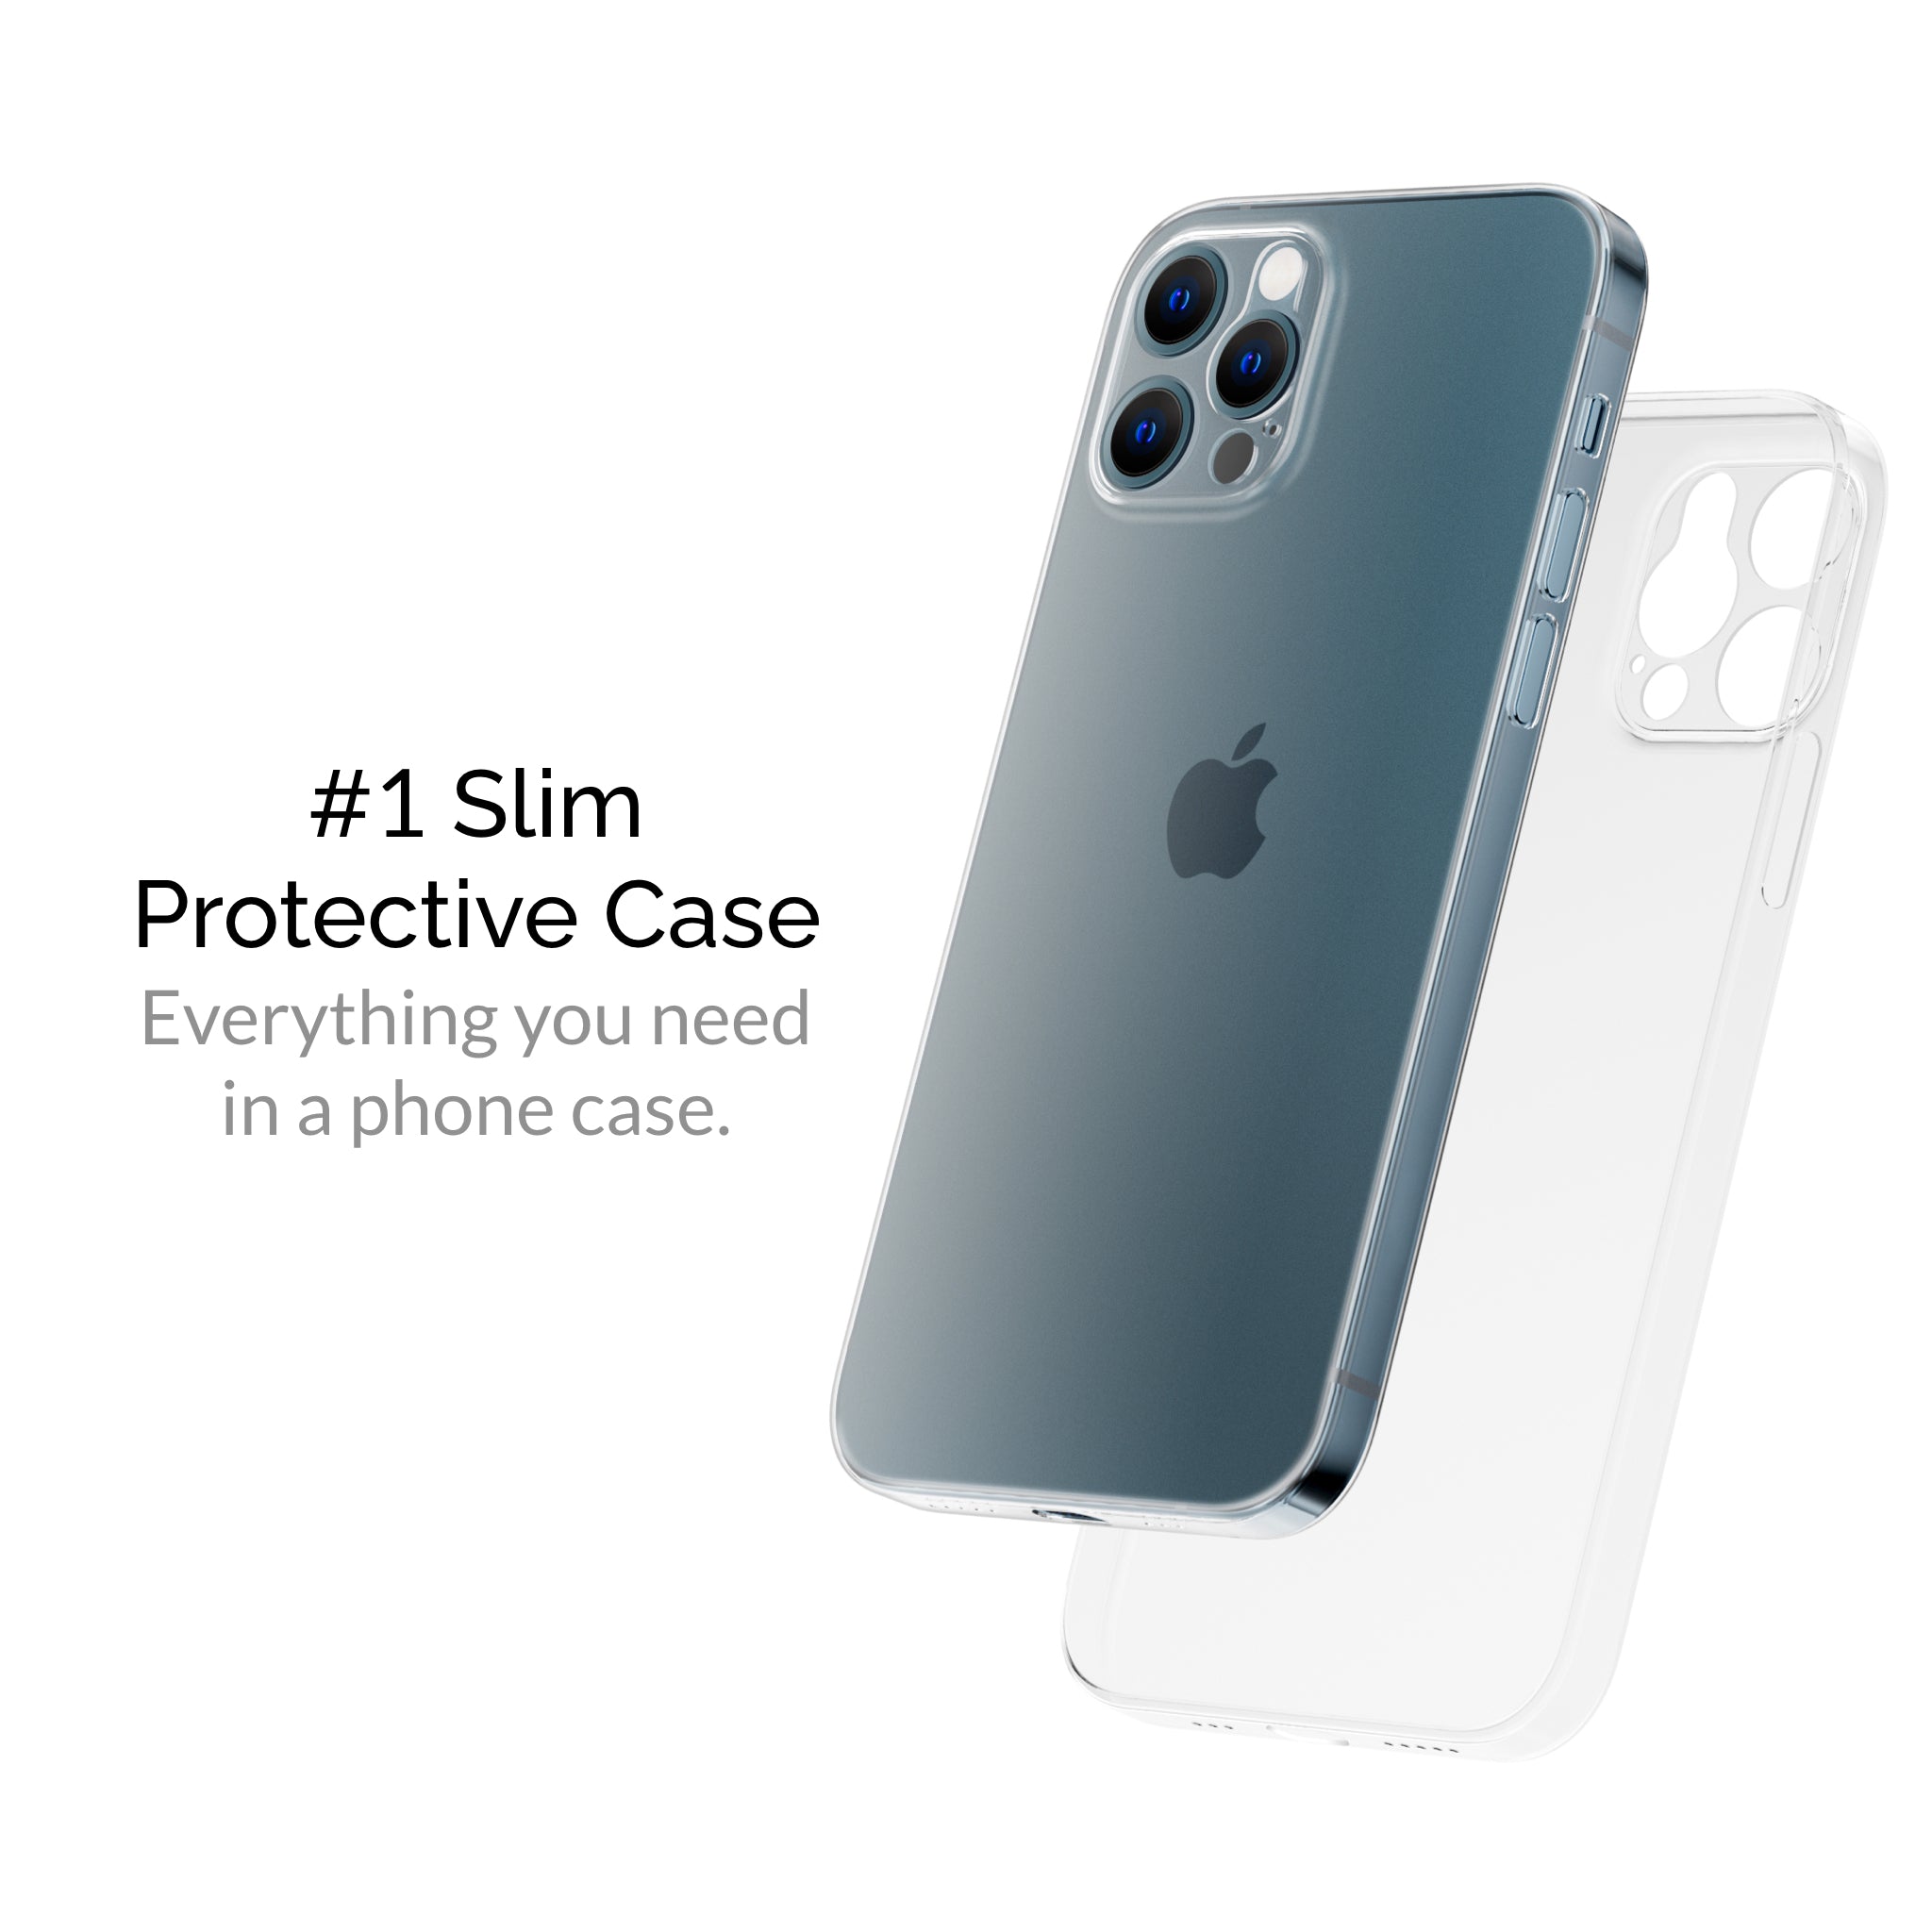 iphone 12 pro cases, iphone 12 pro case, slimcase iphone 12 pro, iphone 12 pro slimcase